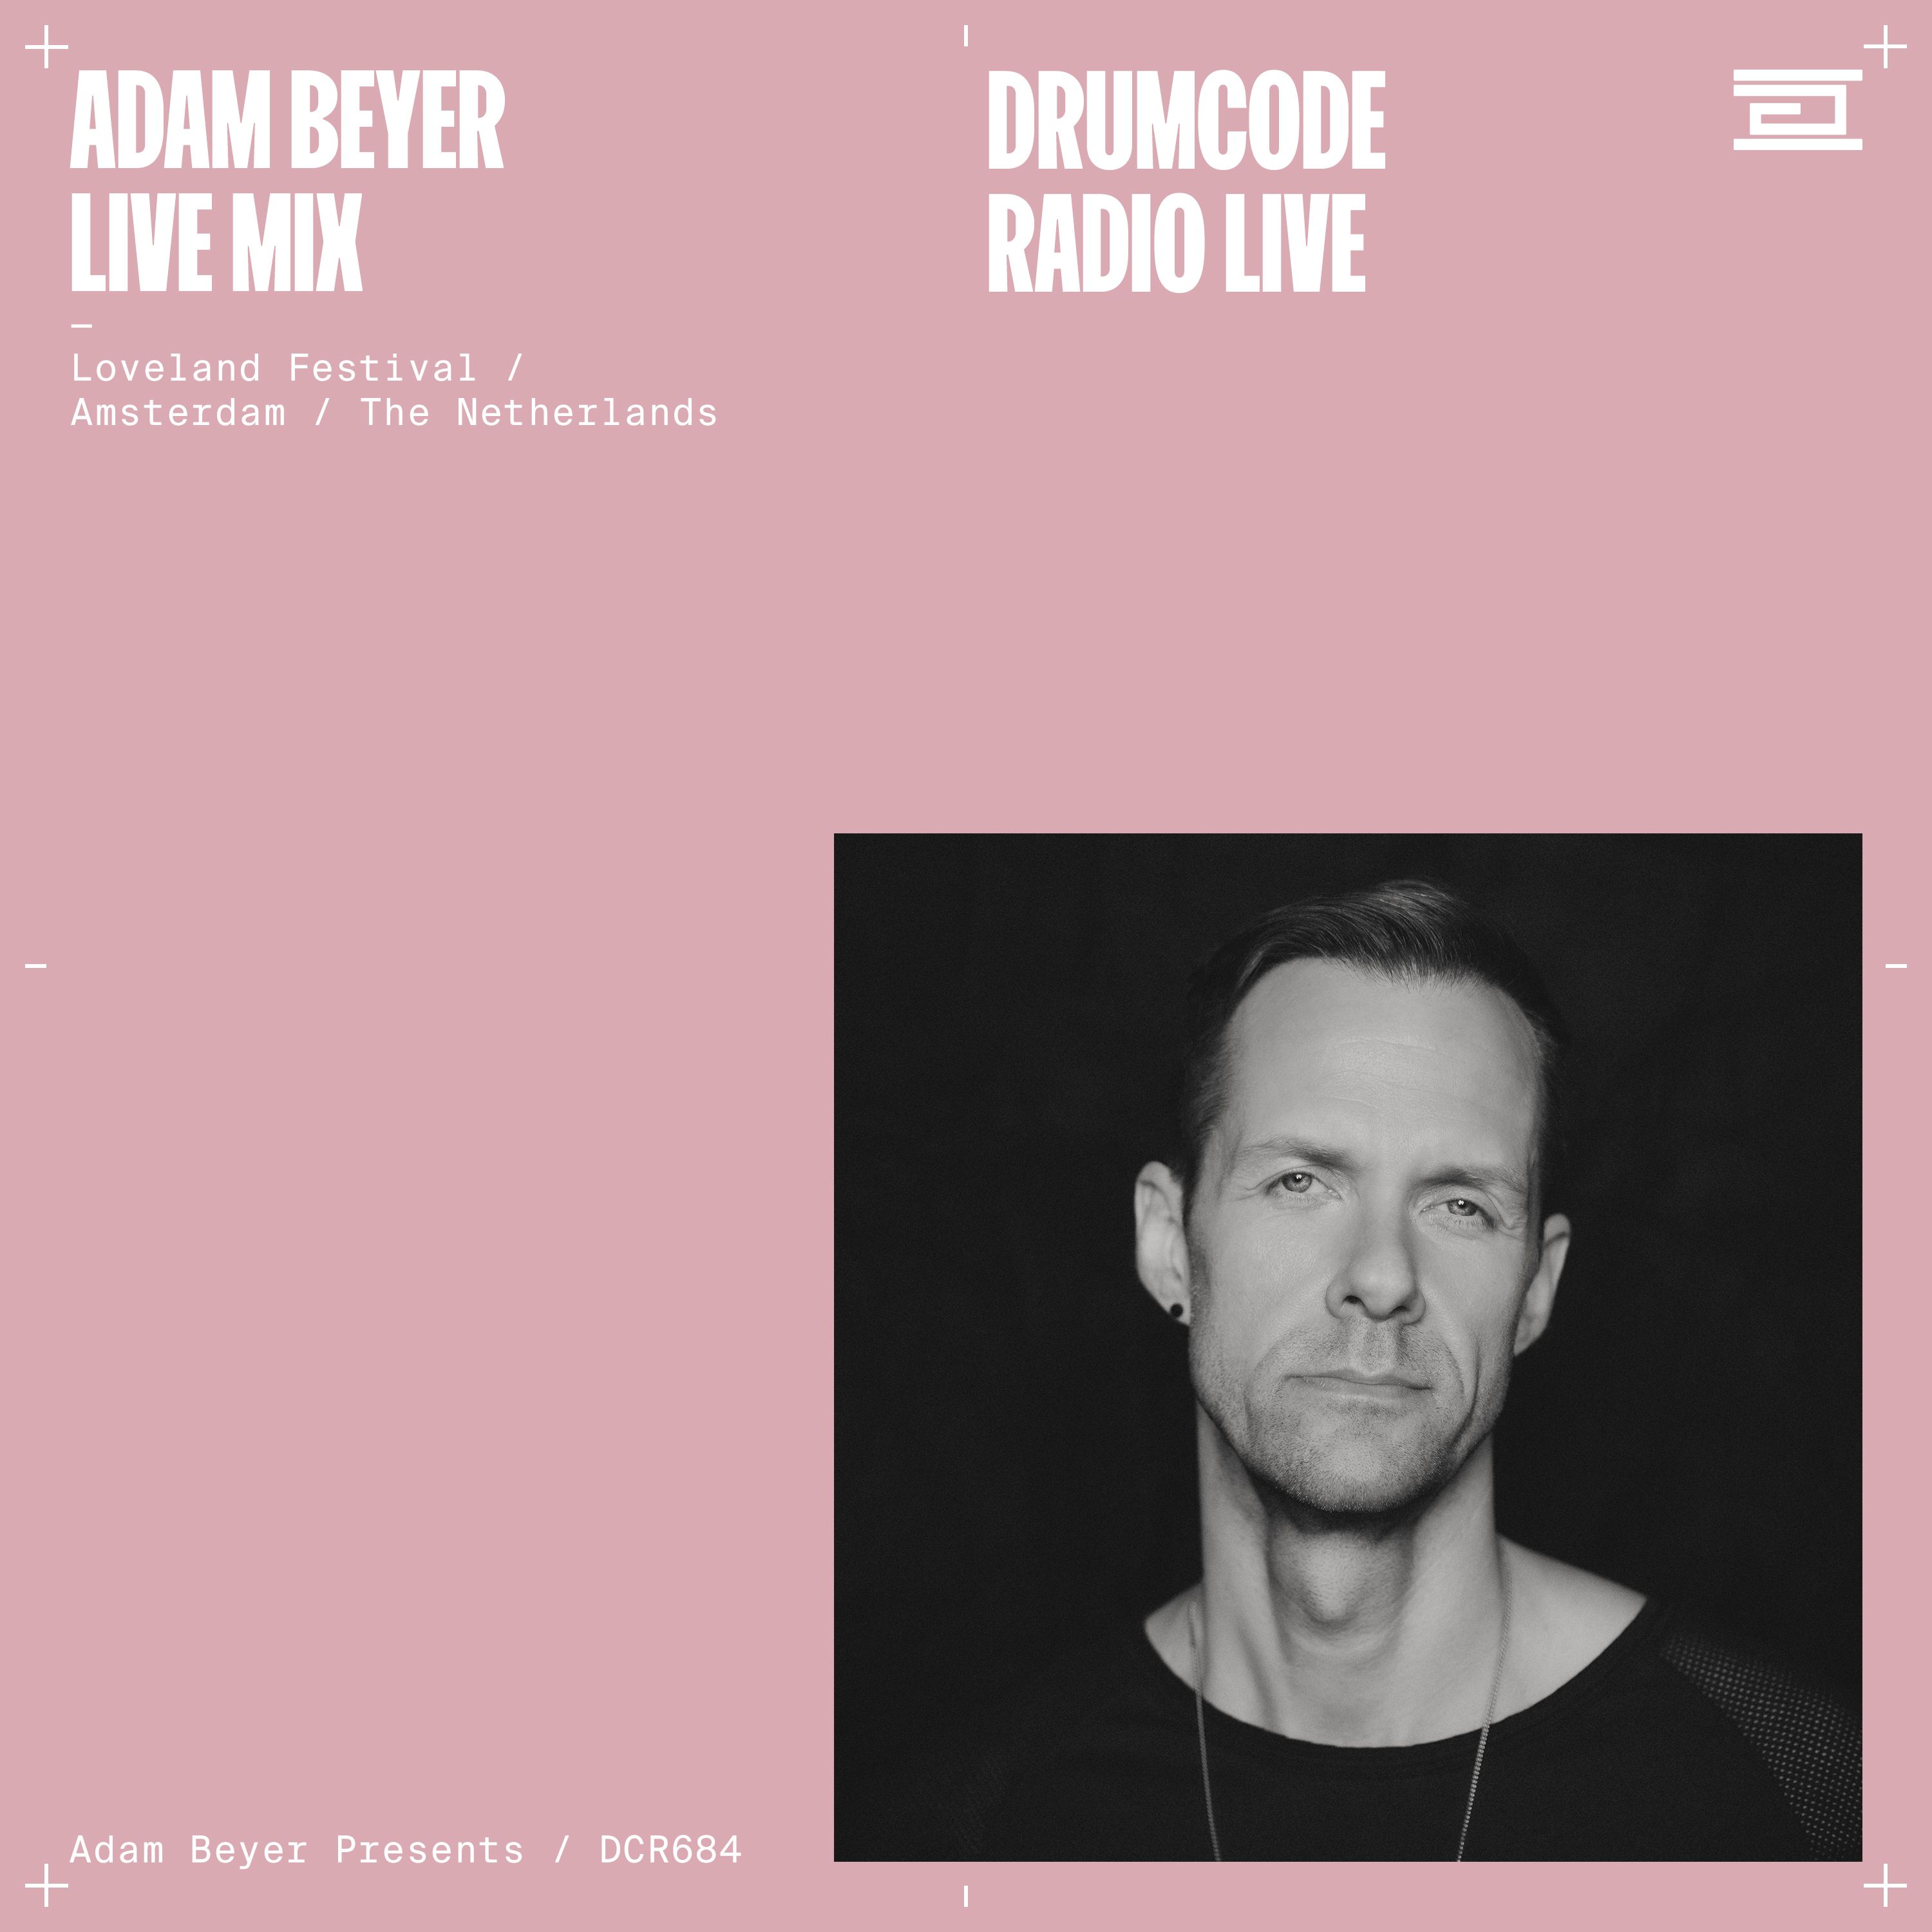 DCR684 – Drumcode Radio Live - Adam Beyer live mix from Loveland Festival, Amsterdam